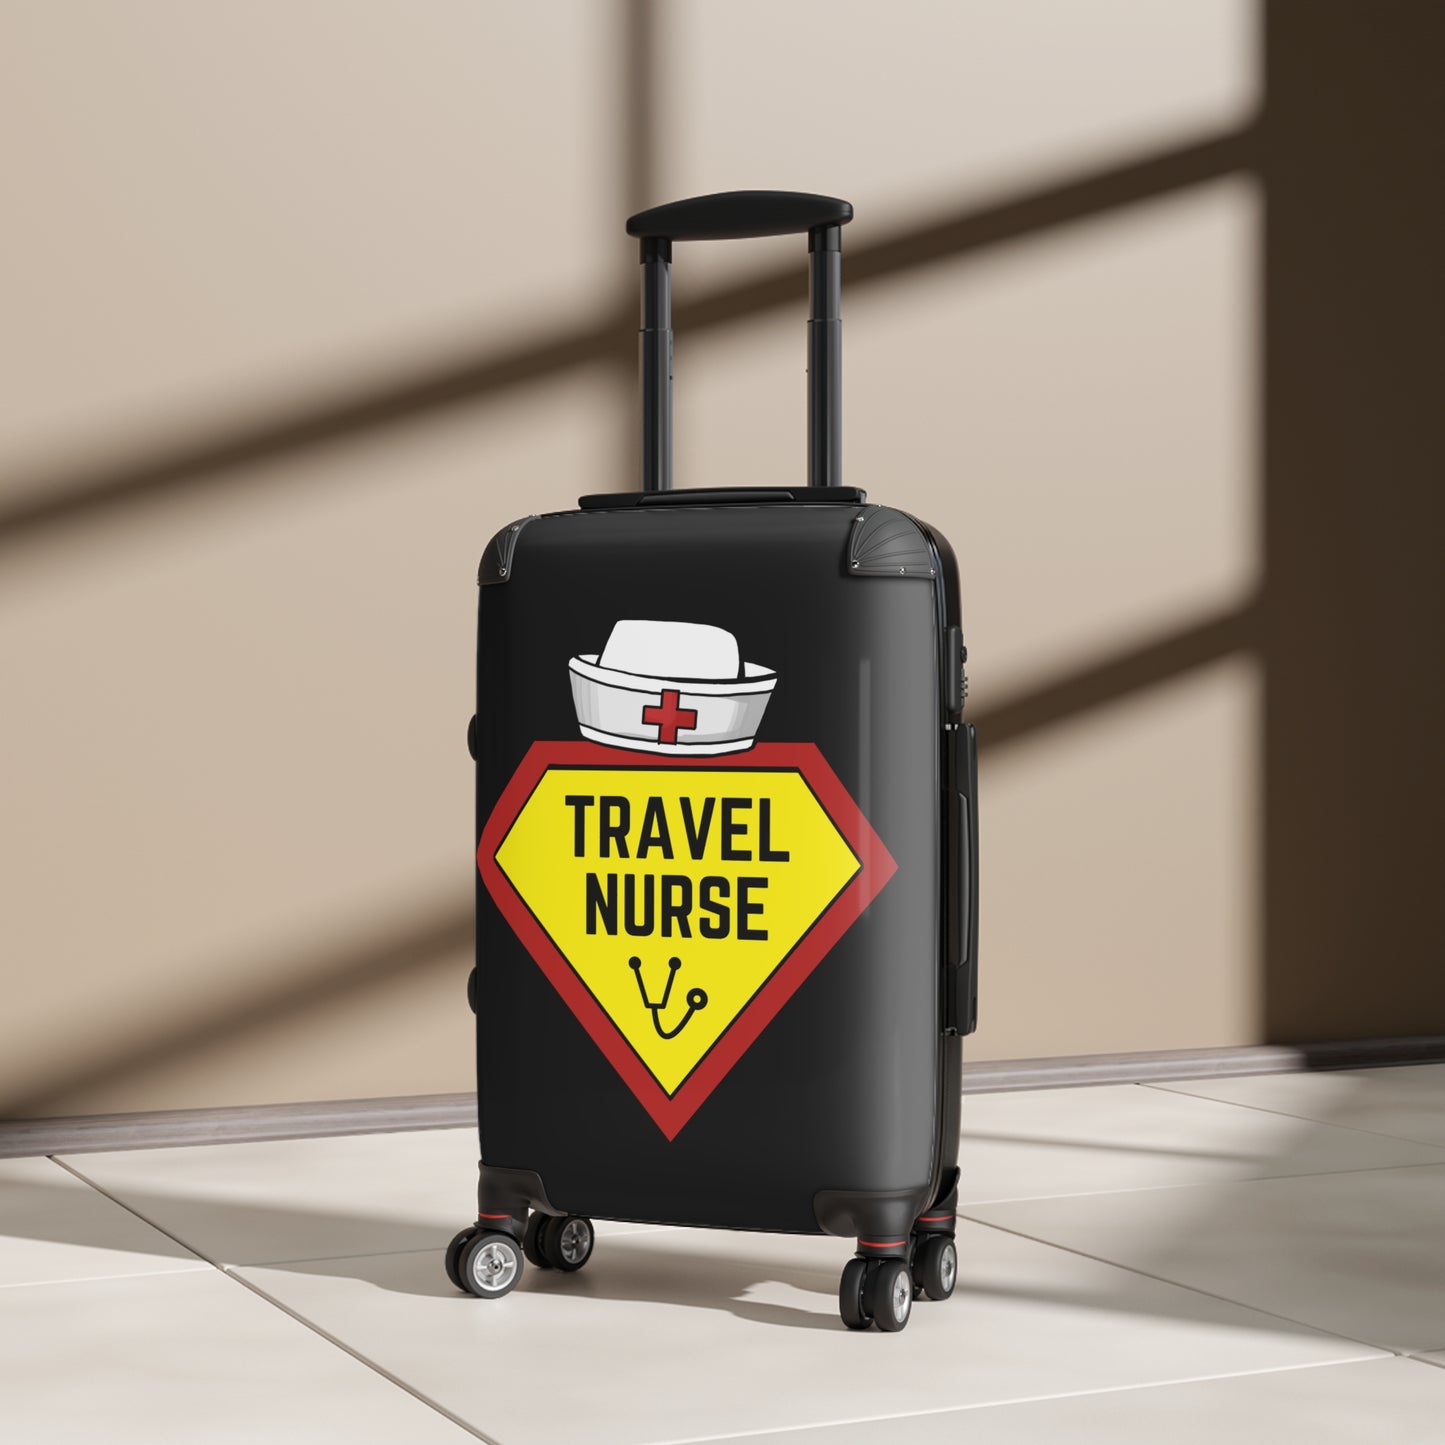 Travel Nurse Suitcase - Black